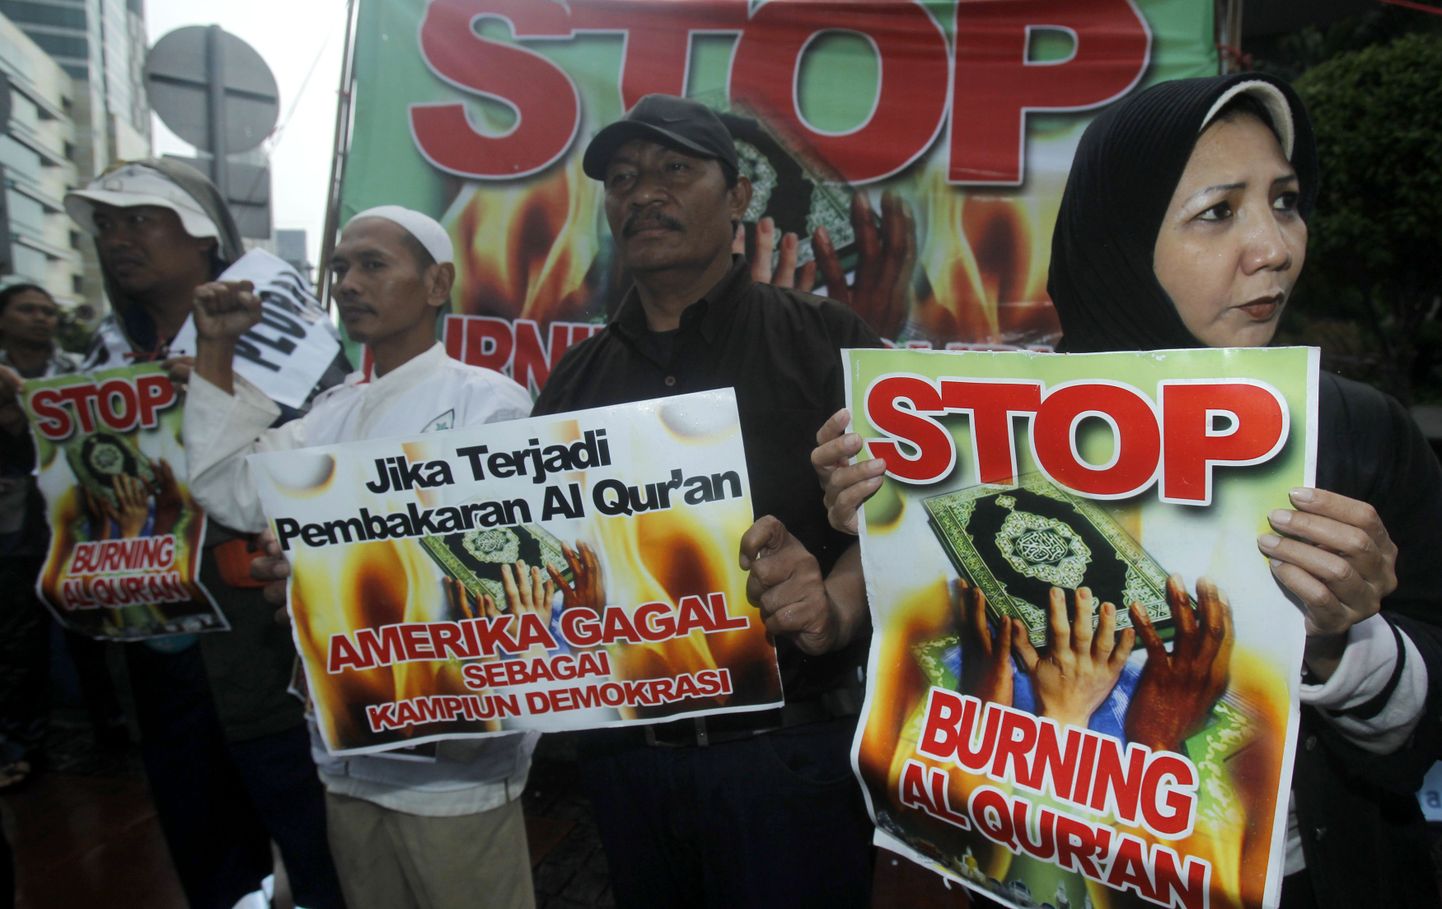 Митинг протеста в Джакарте. Участники акции протестуют против планов сожжения Корана.